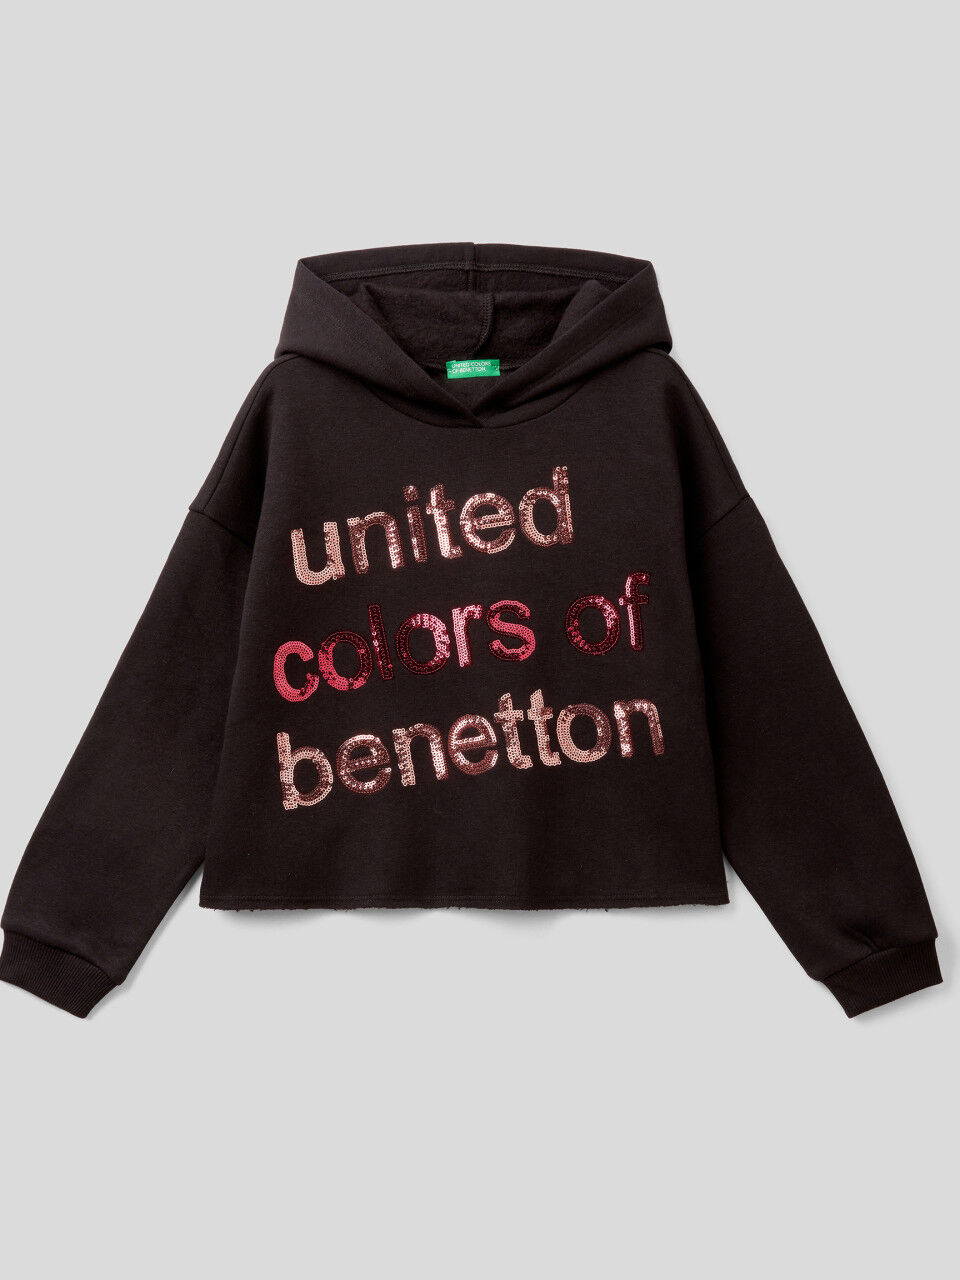 United colors of benetton sweatshirt Gelb 10Y Rabatt 85 % KINDER Pullovers & Sweatshirts NO STYLE 